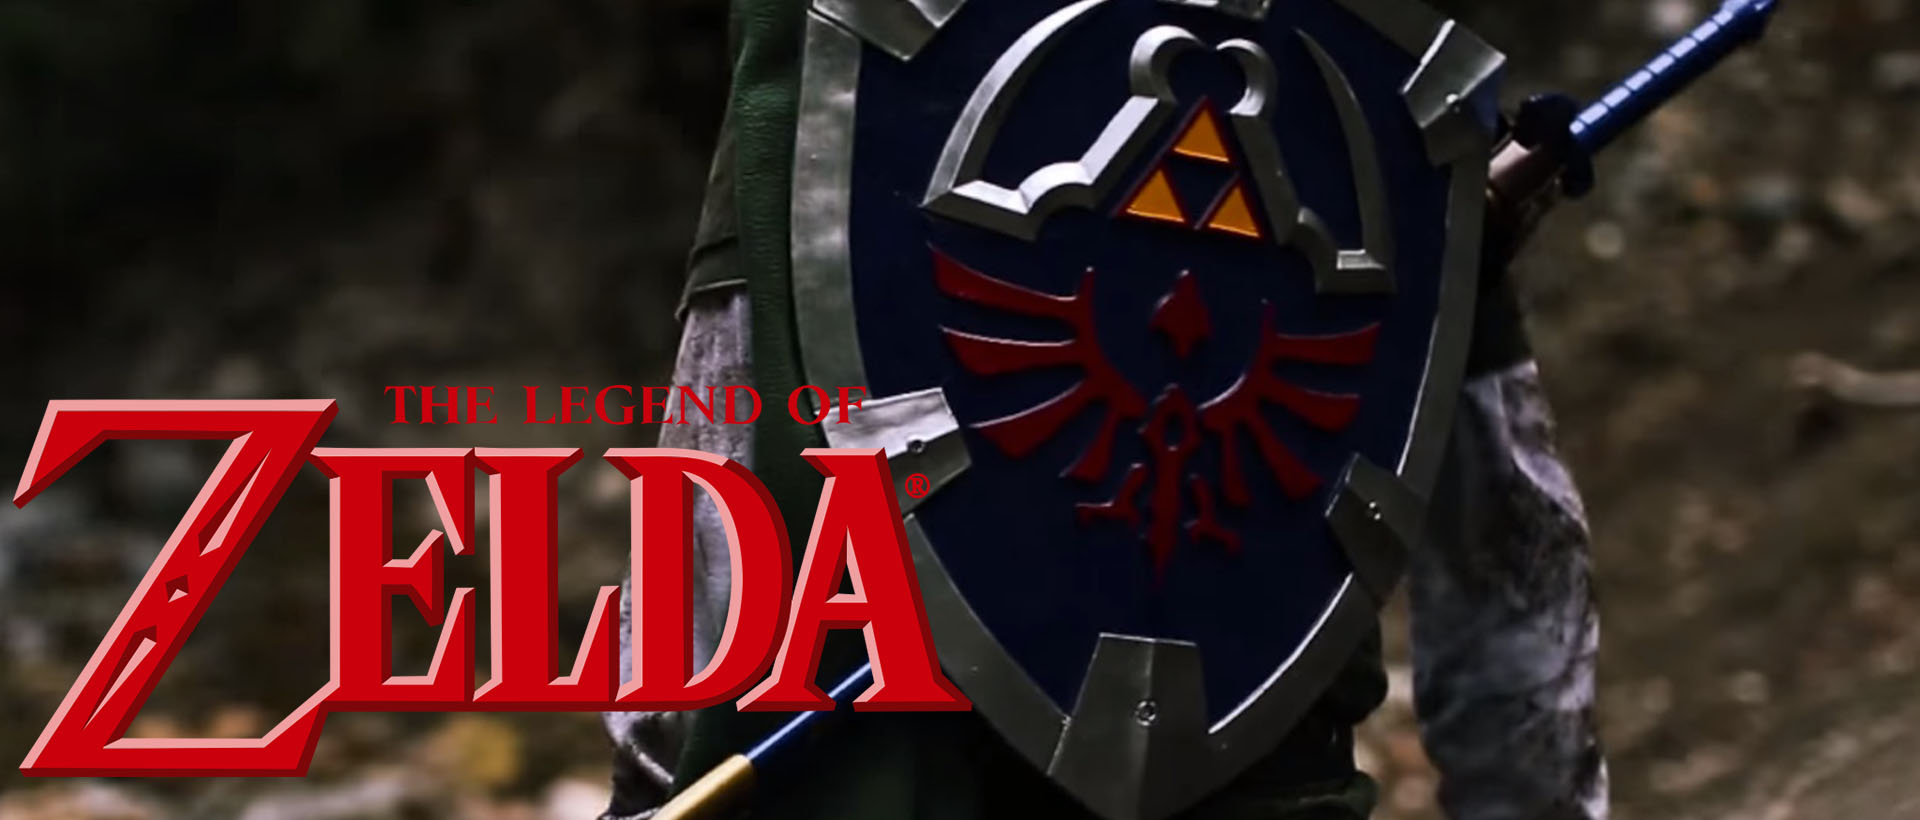 Legend Of Zelda Movie: Release Date, Cast - Everything We Know